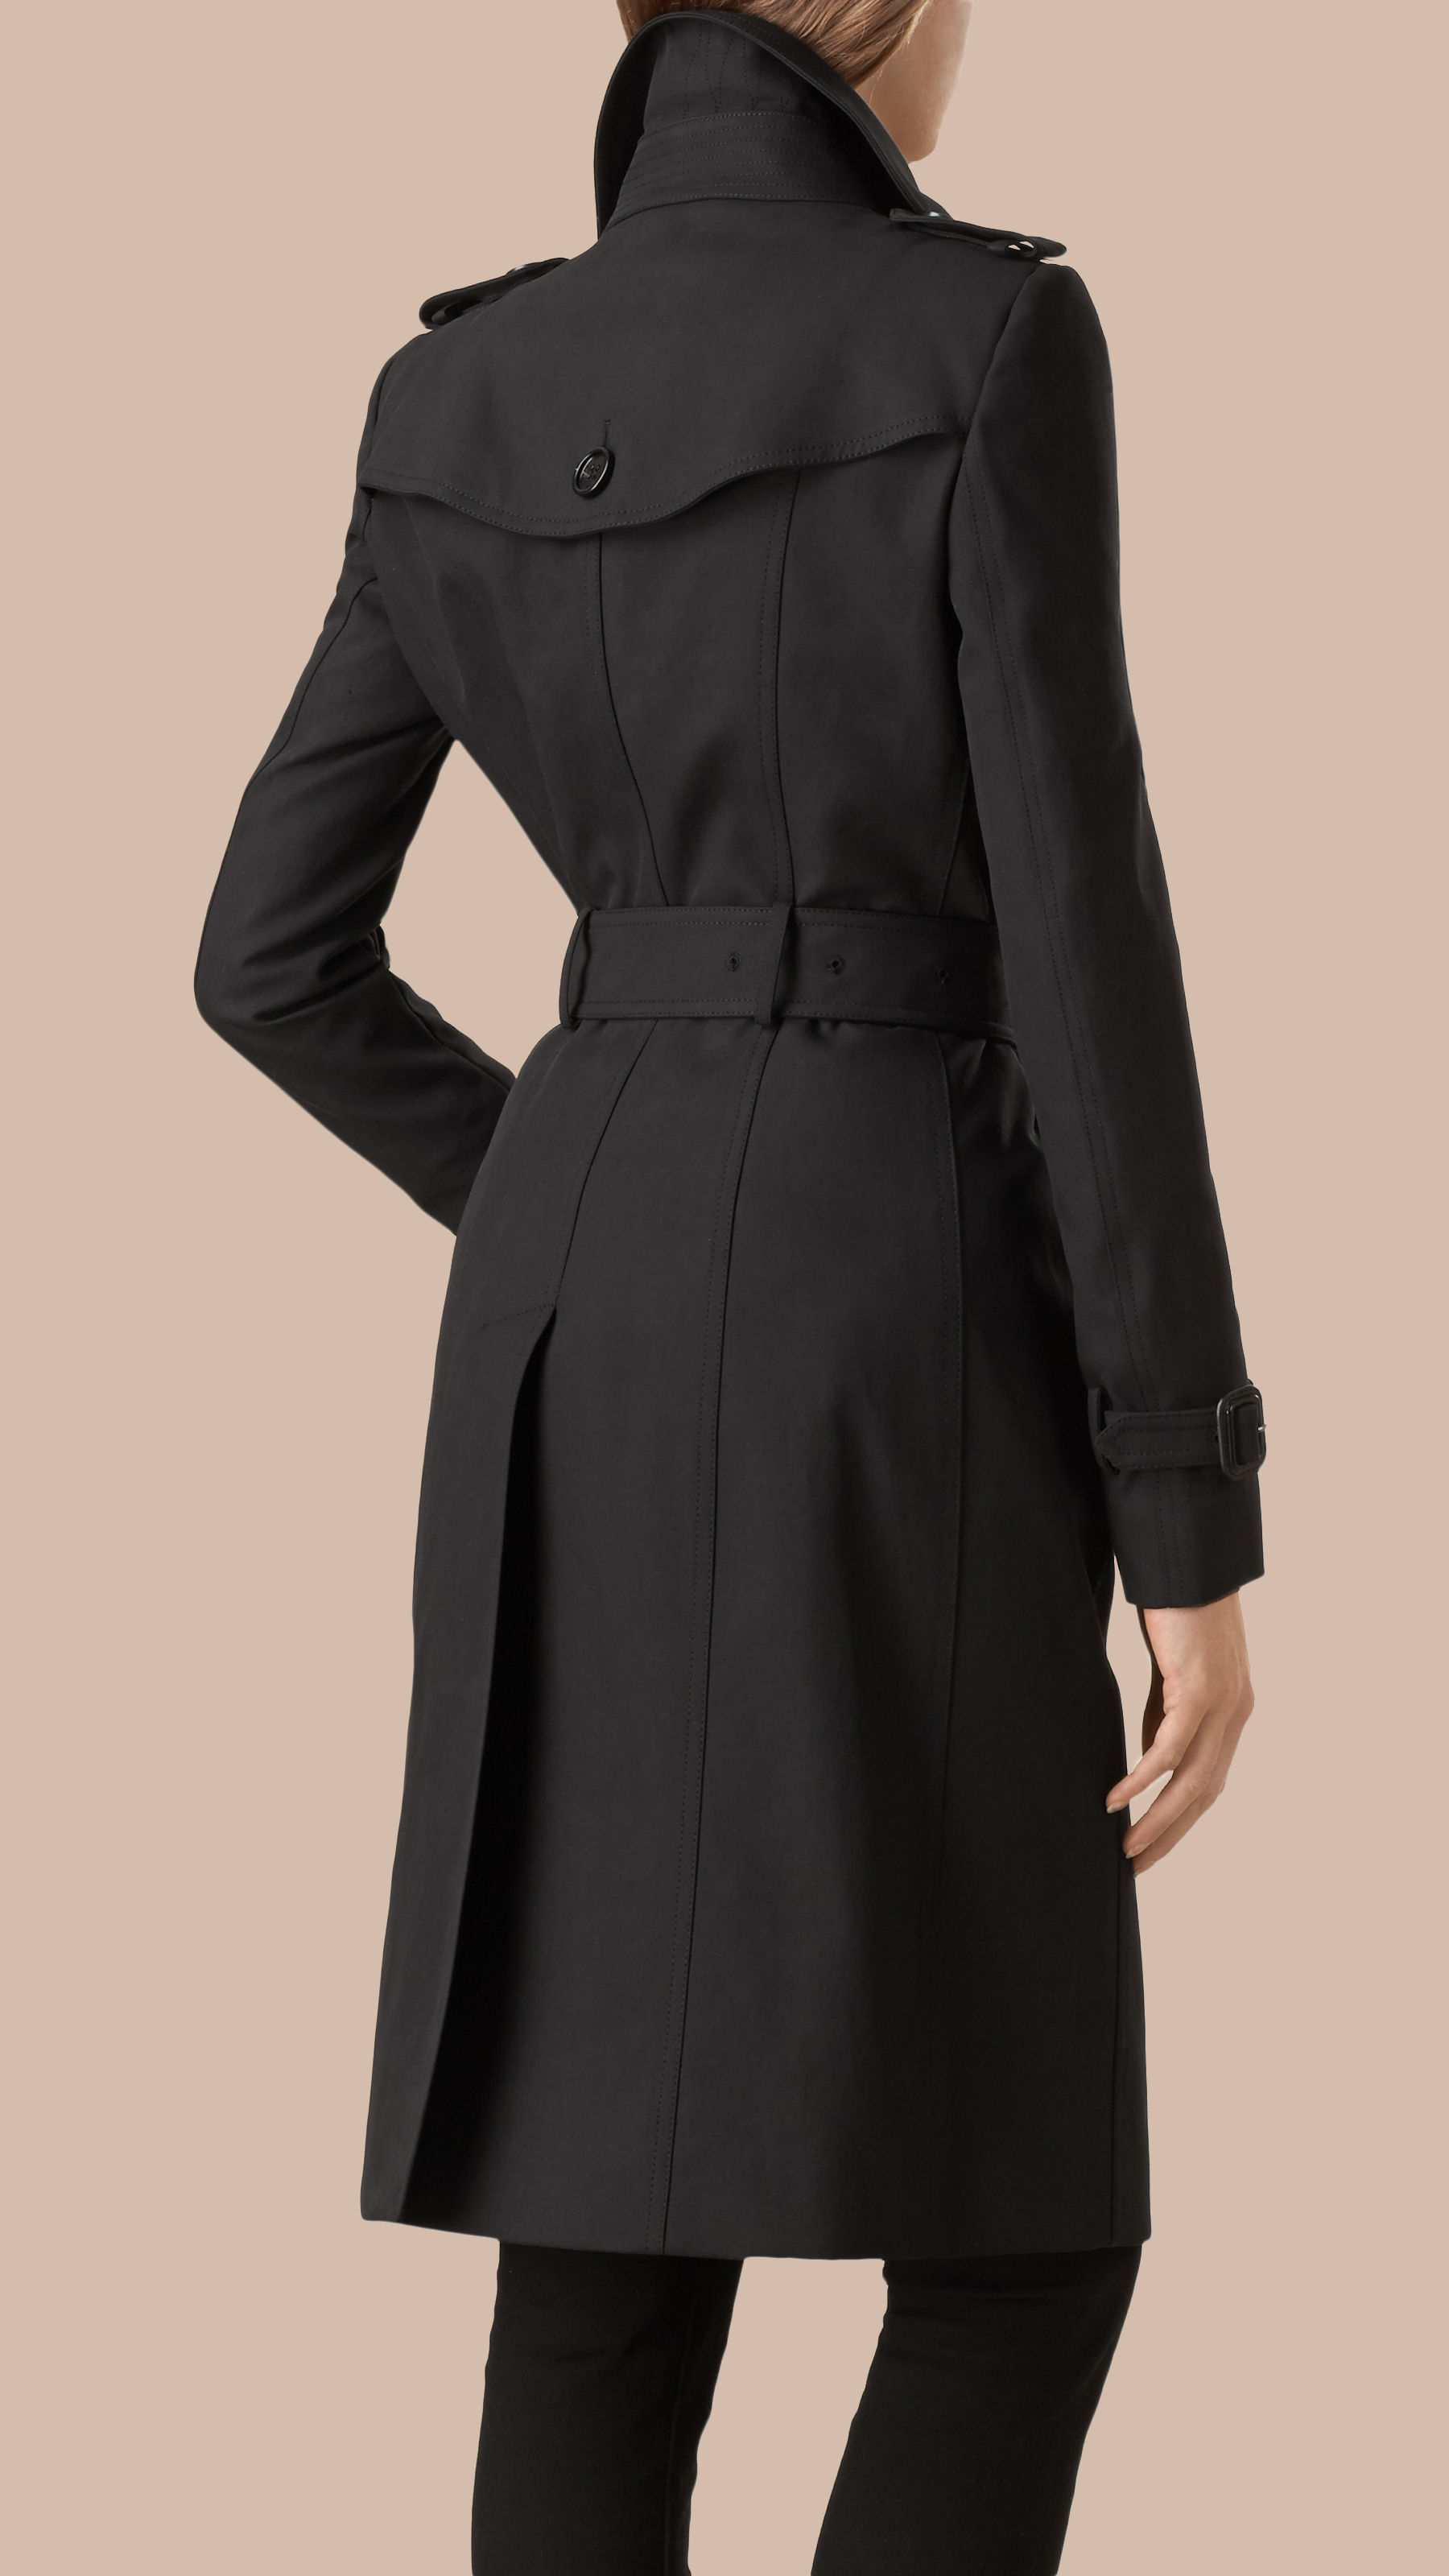 Lyst - Burberry Cotton Gabardine Trench Coat Black in Black